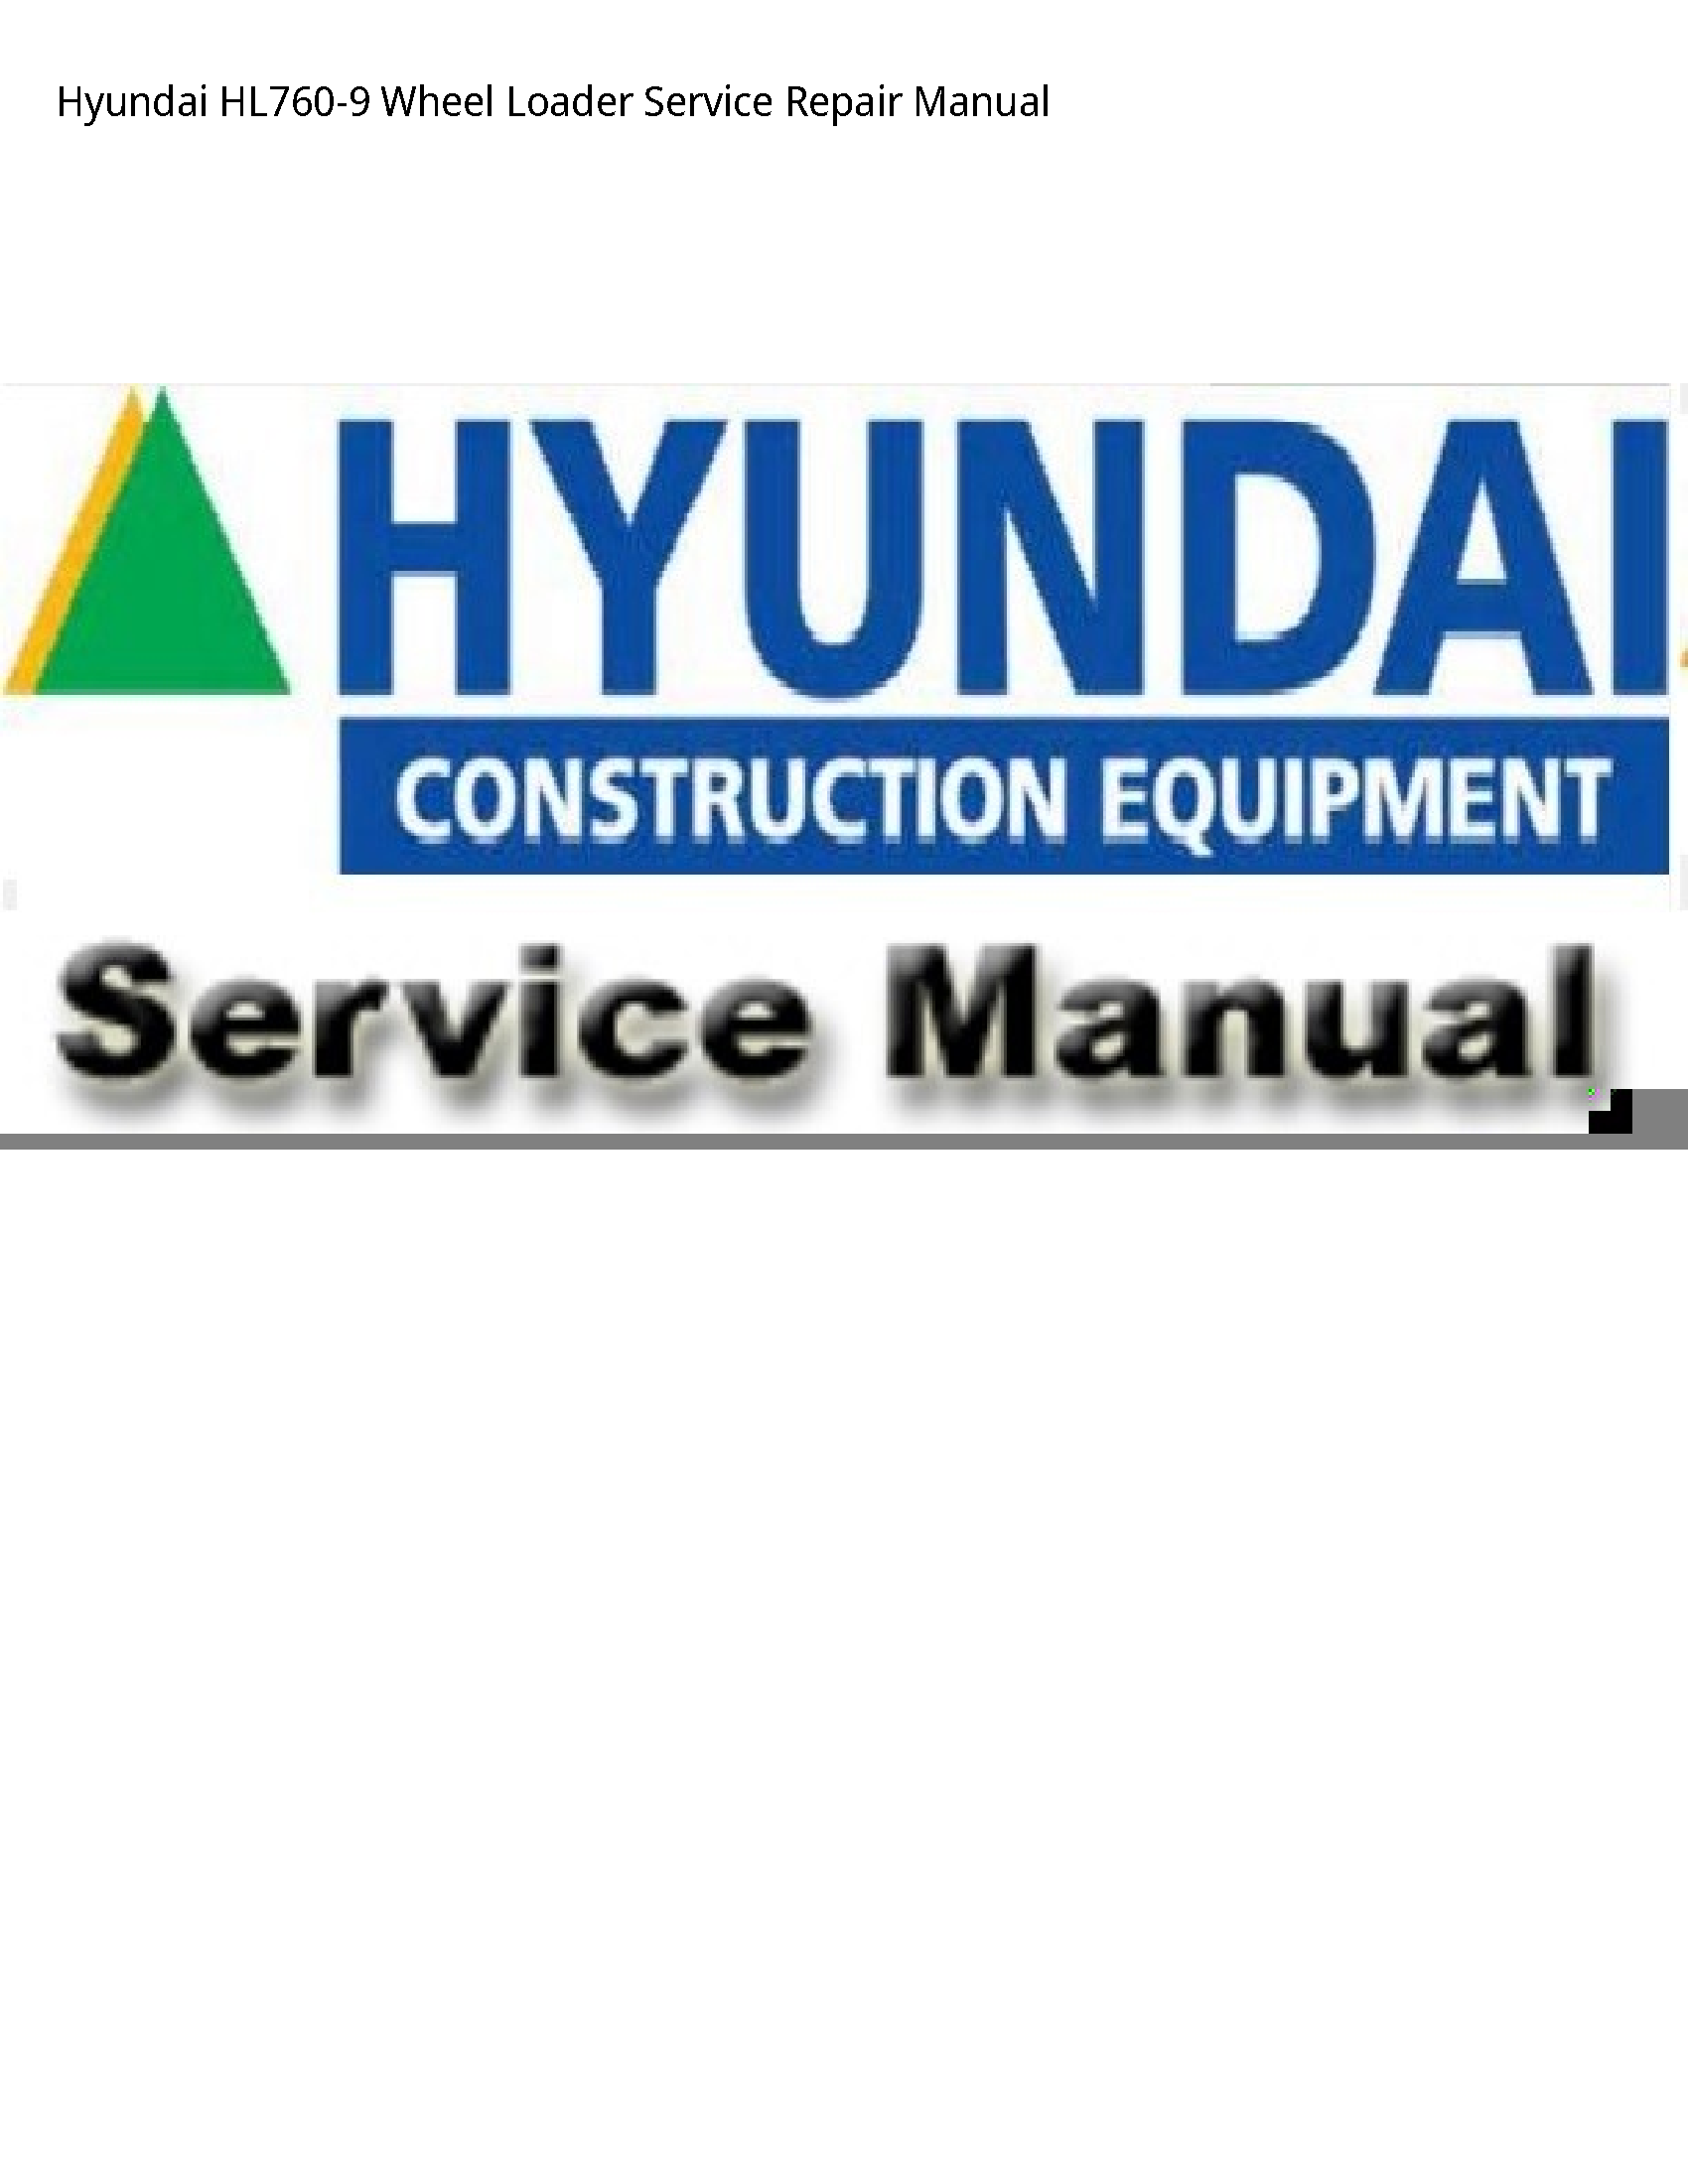 Hyundai HL760-9 Wheel Loader manual